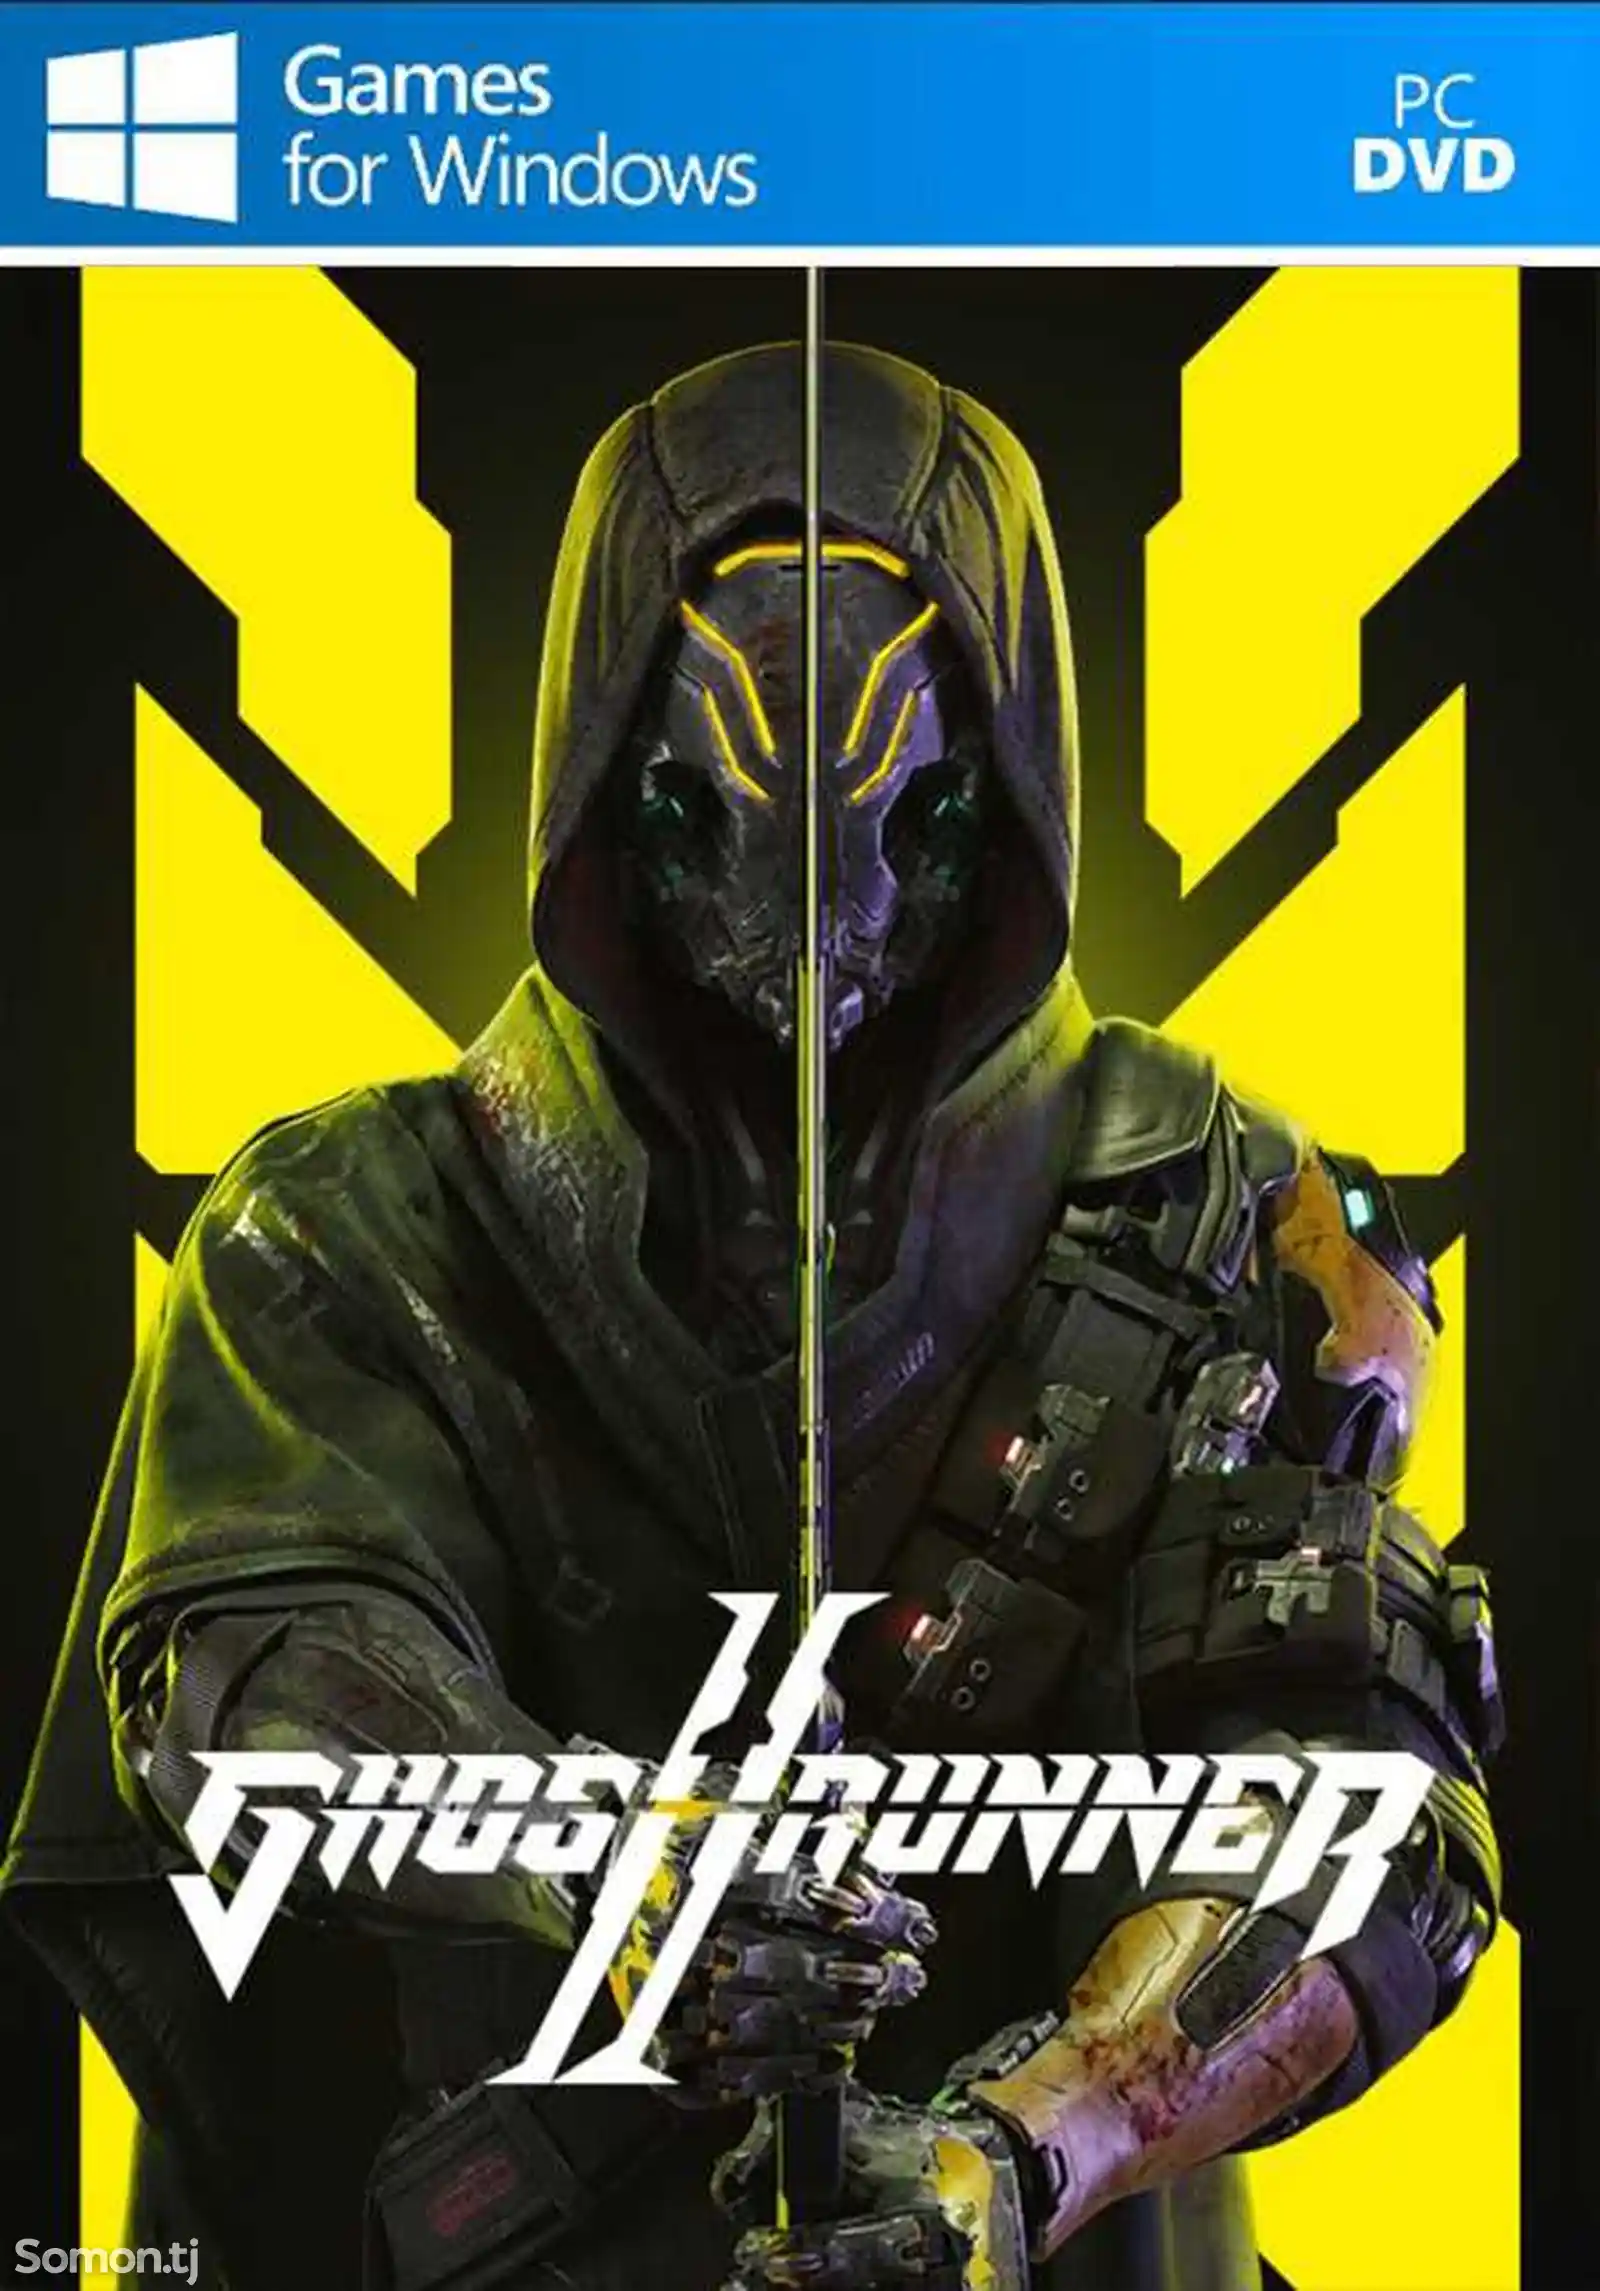 Игра Ghostrunner 2 компьютера-пк-pc-1